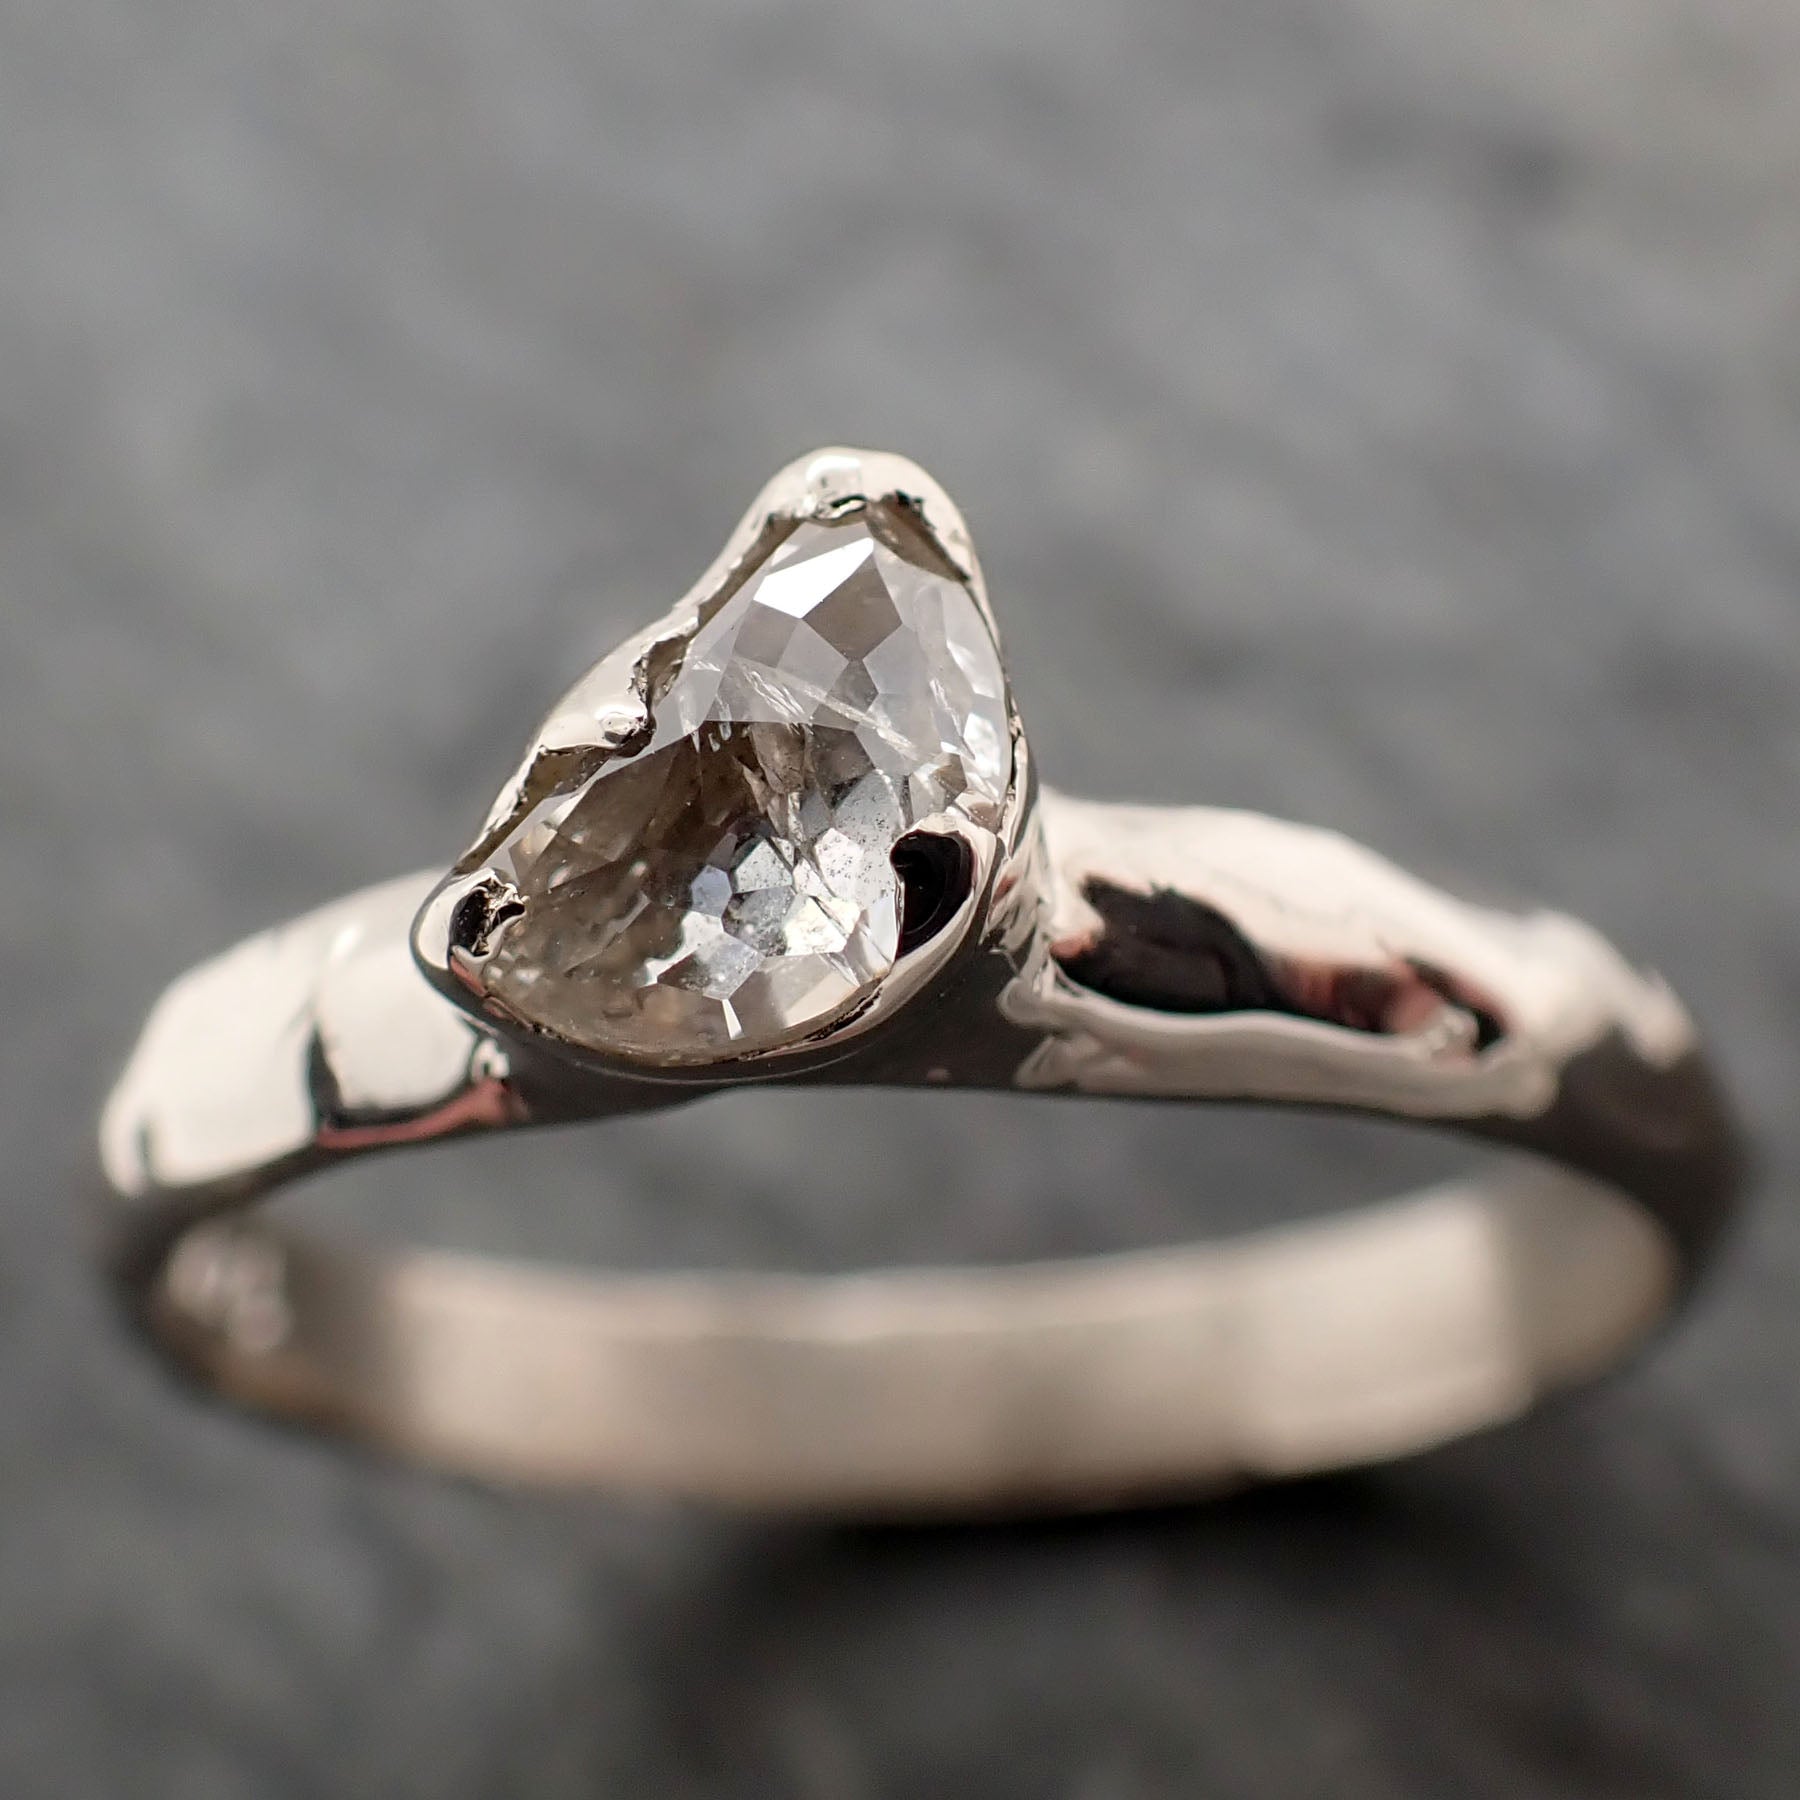 Fancy Cut Half Moon Diamond Solitaire Engagement 14k White Gold Wedding Ring byAngeline 2864